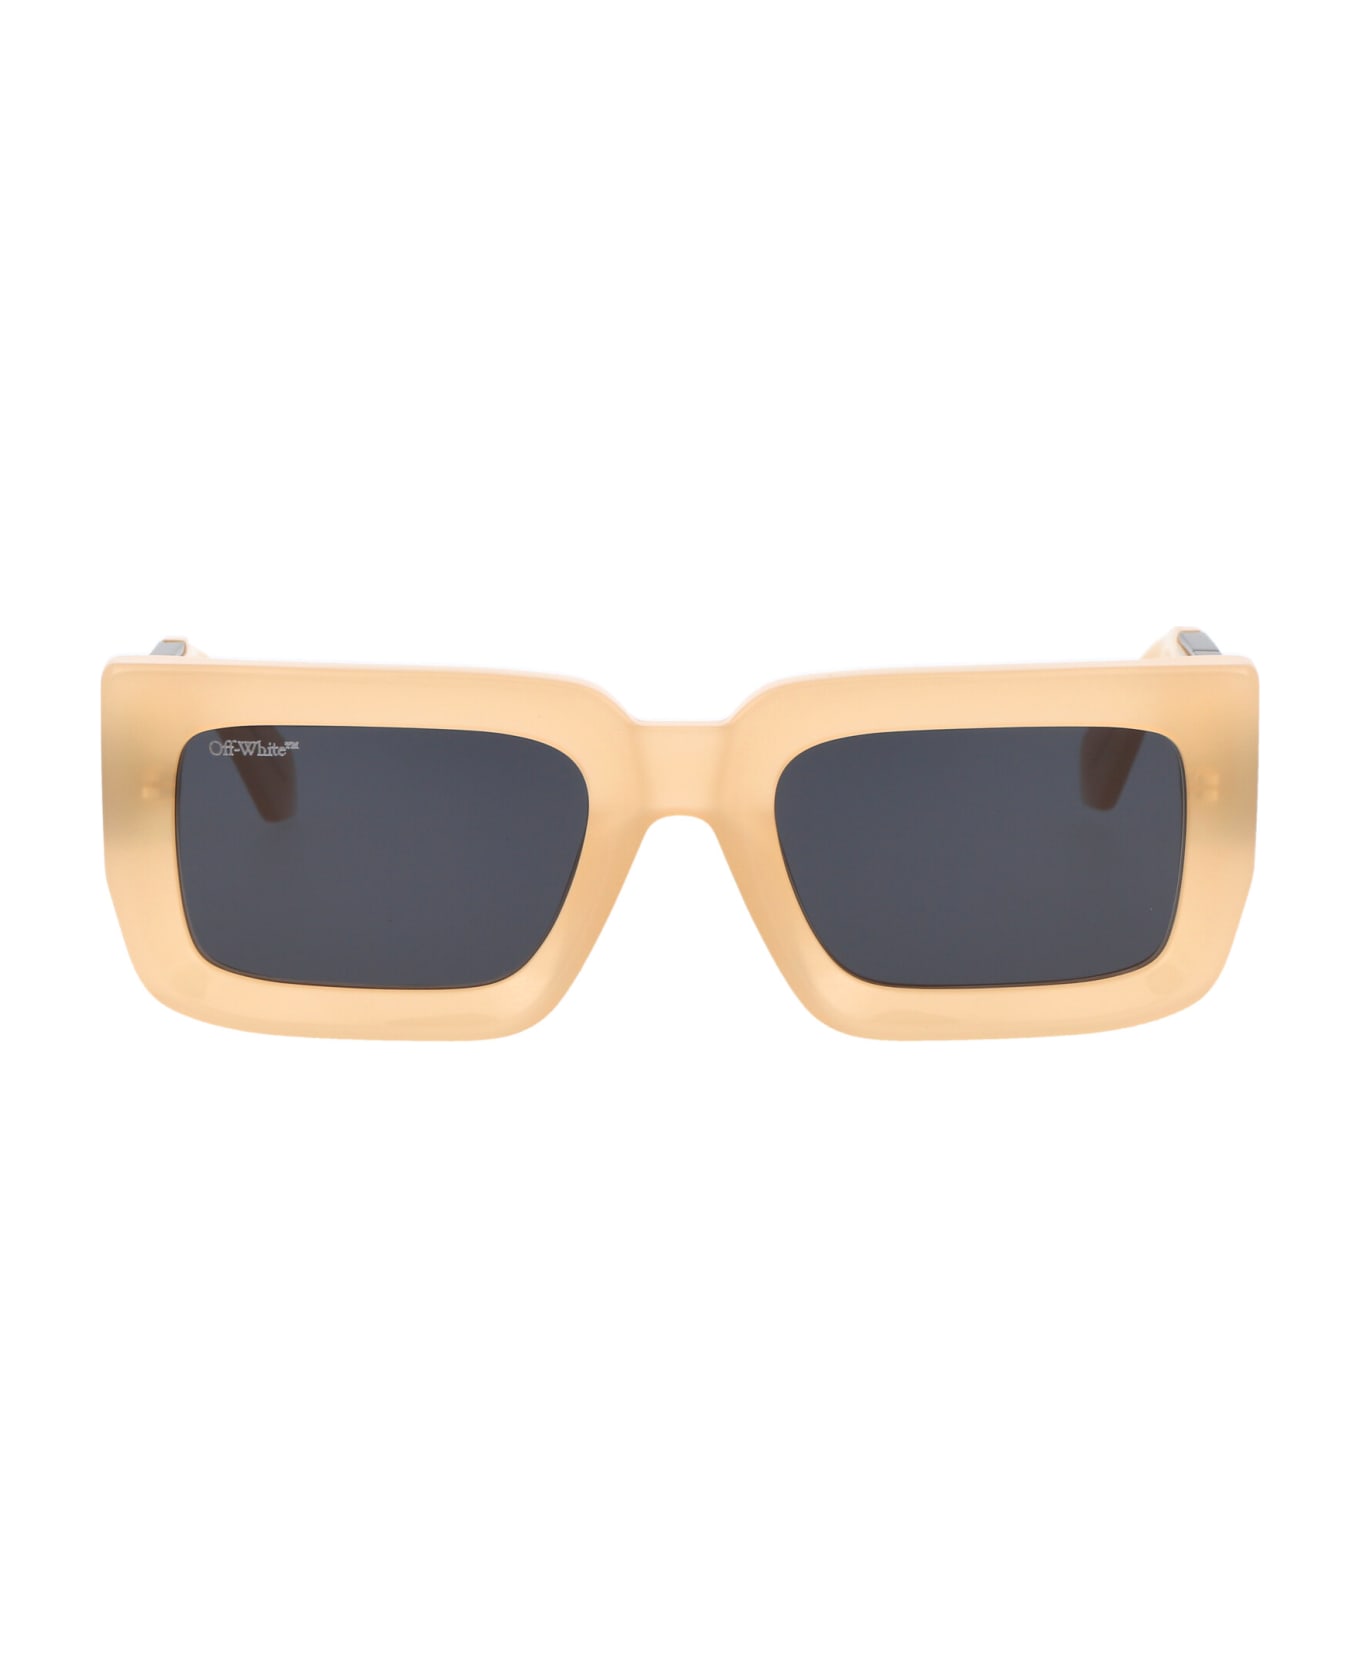 Off-White Boston Sunglasses - 1707 SAND DARK GREY